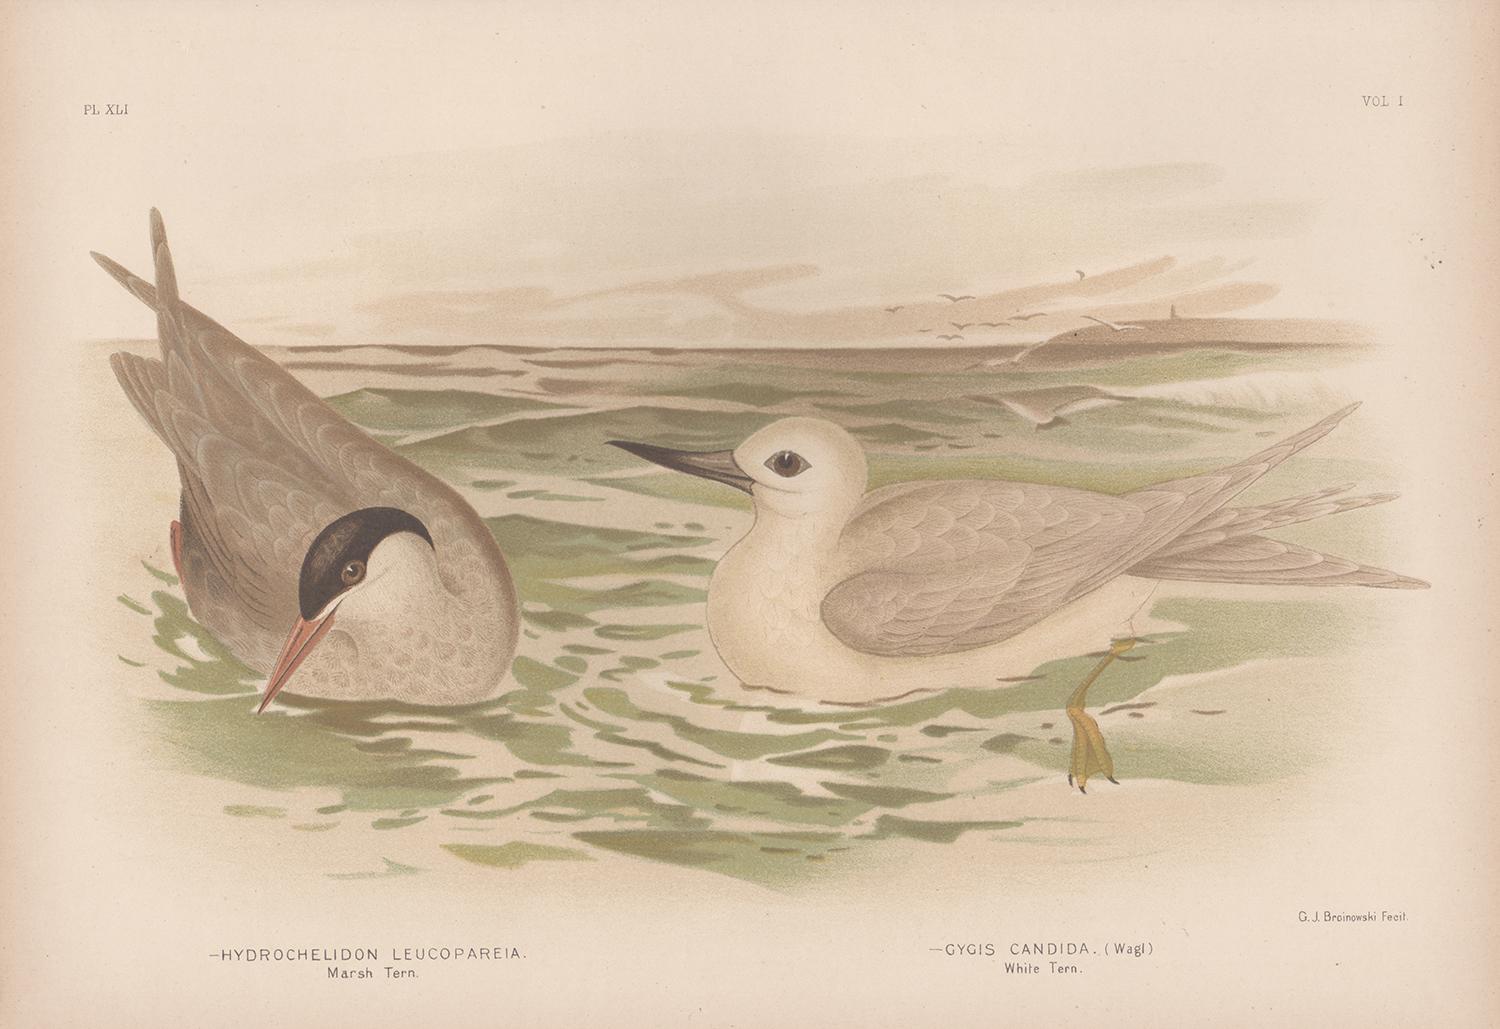 Marsh Tern and White Tern, ancien tirage chromolithographie d'oiseau de mer, 1889